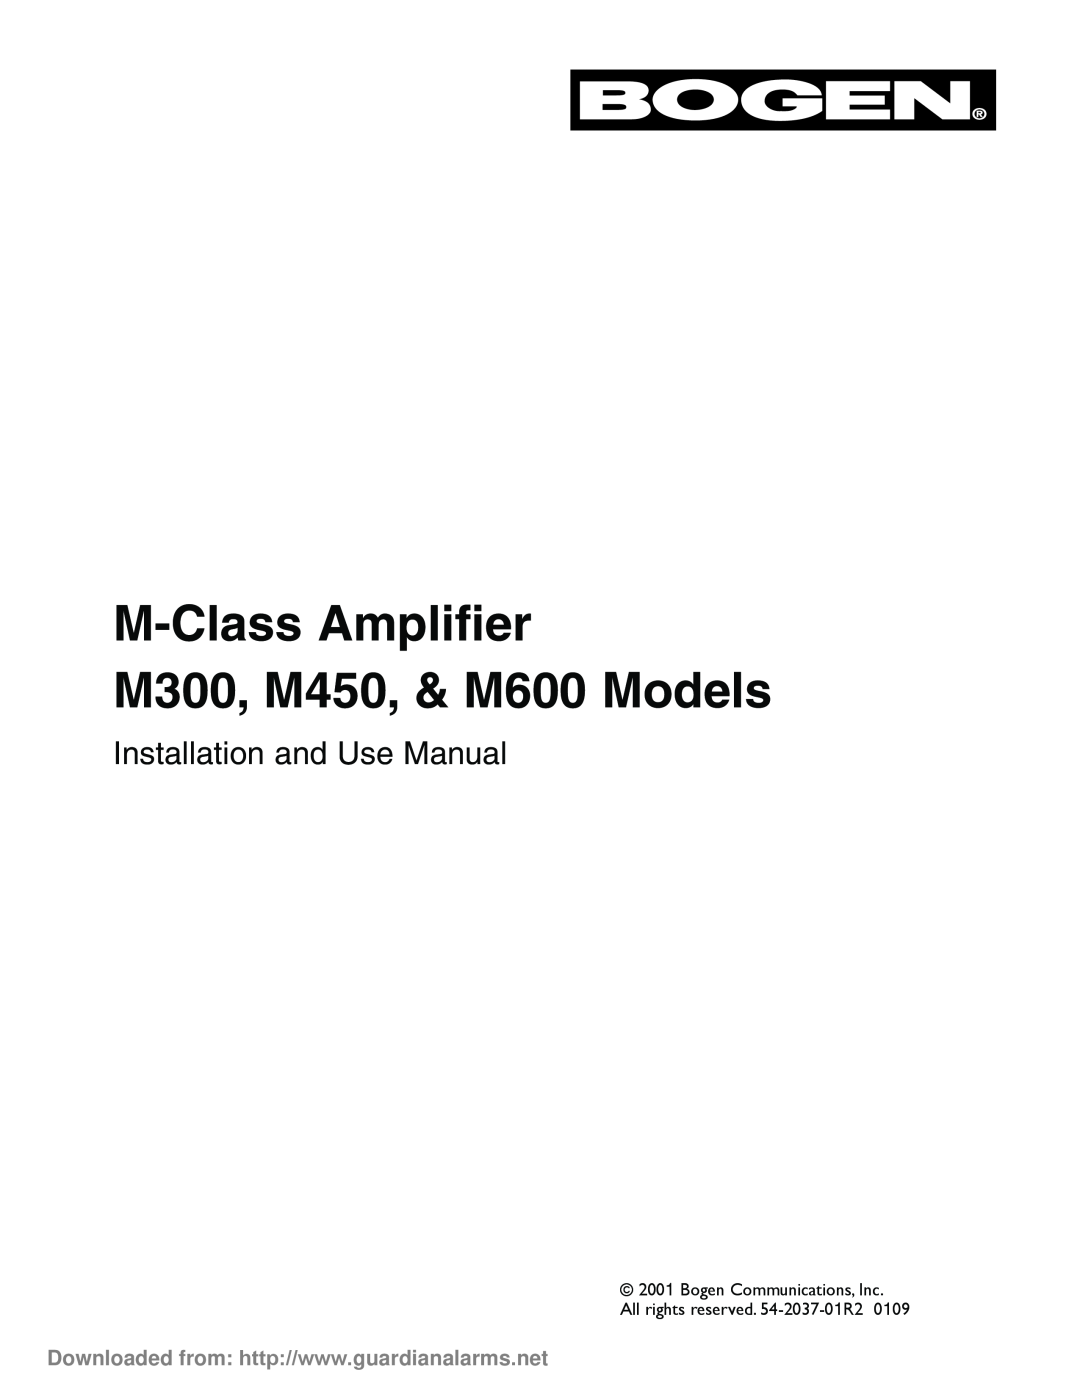 Bogen manual M-ClassAmplifier M300, M450, & M600 Models, Installation and Use Manual 